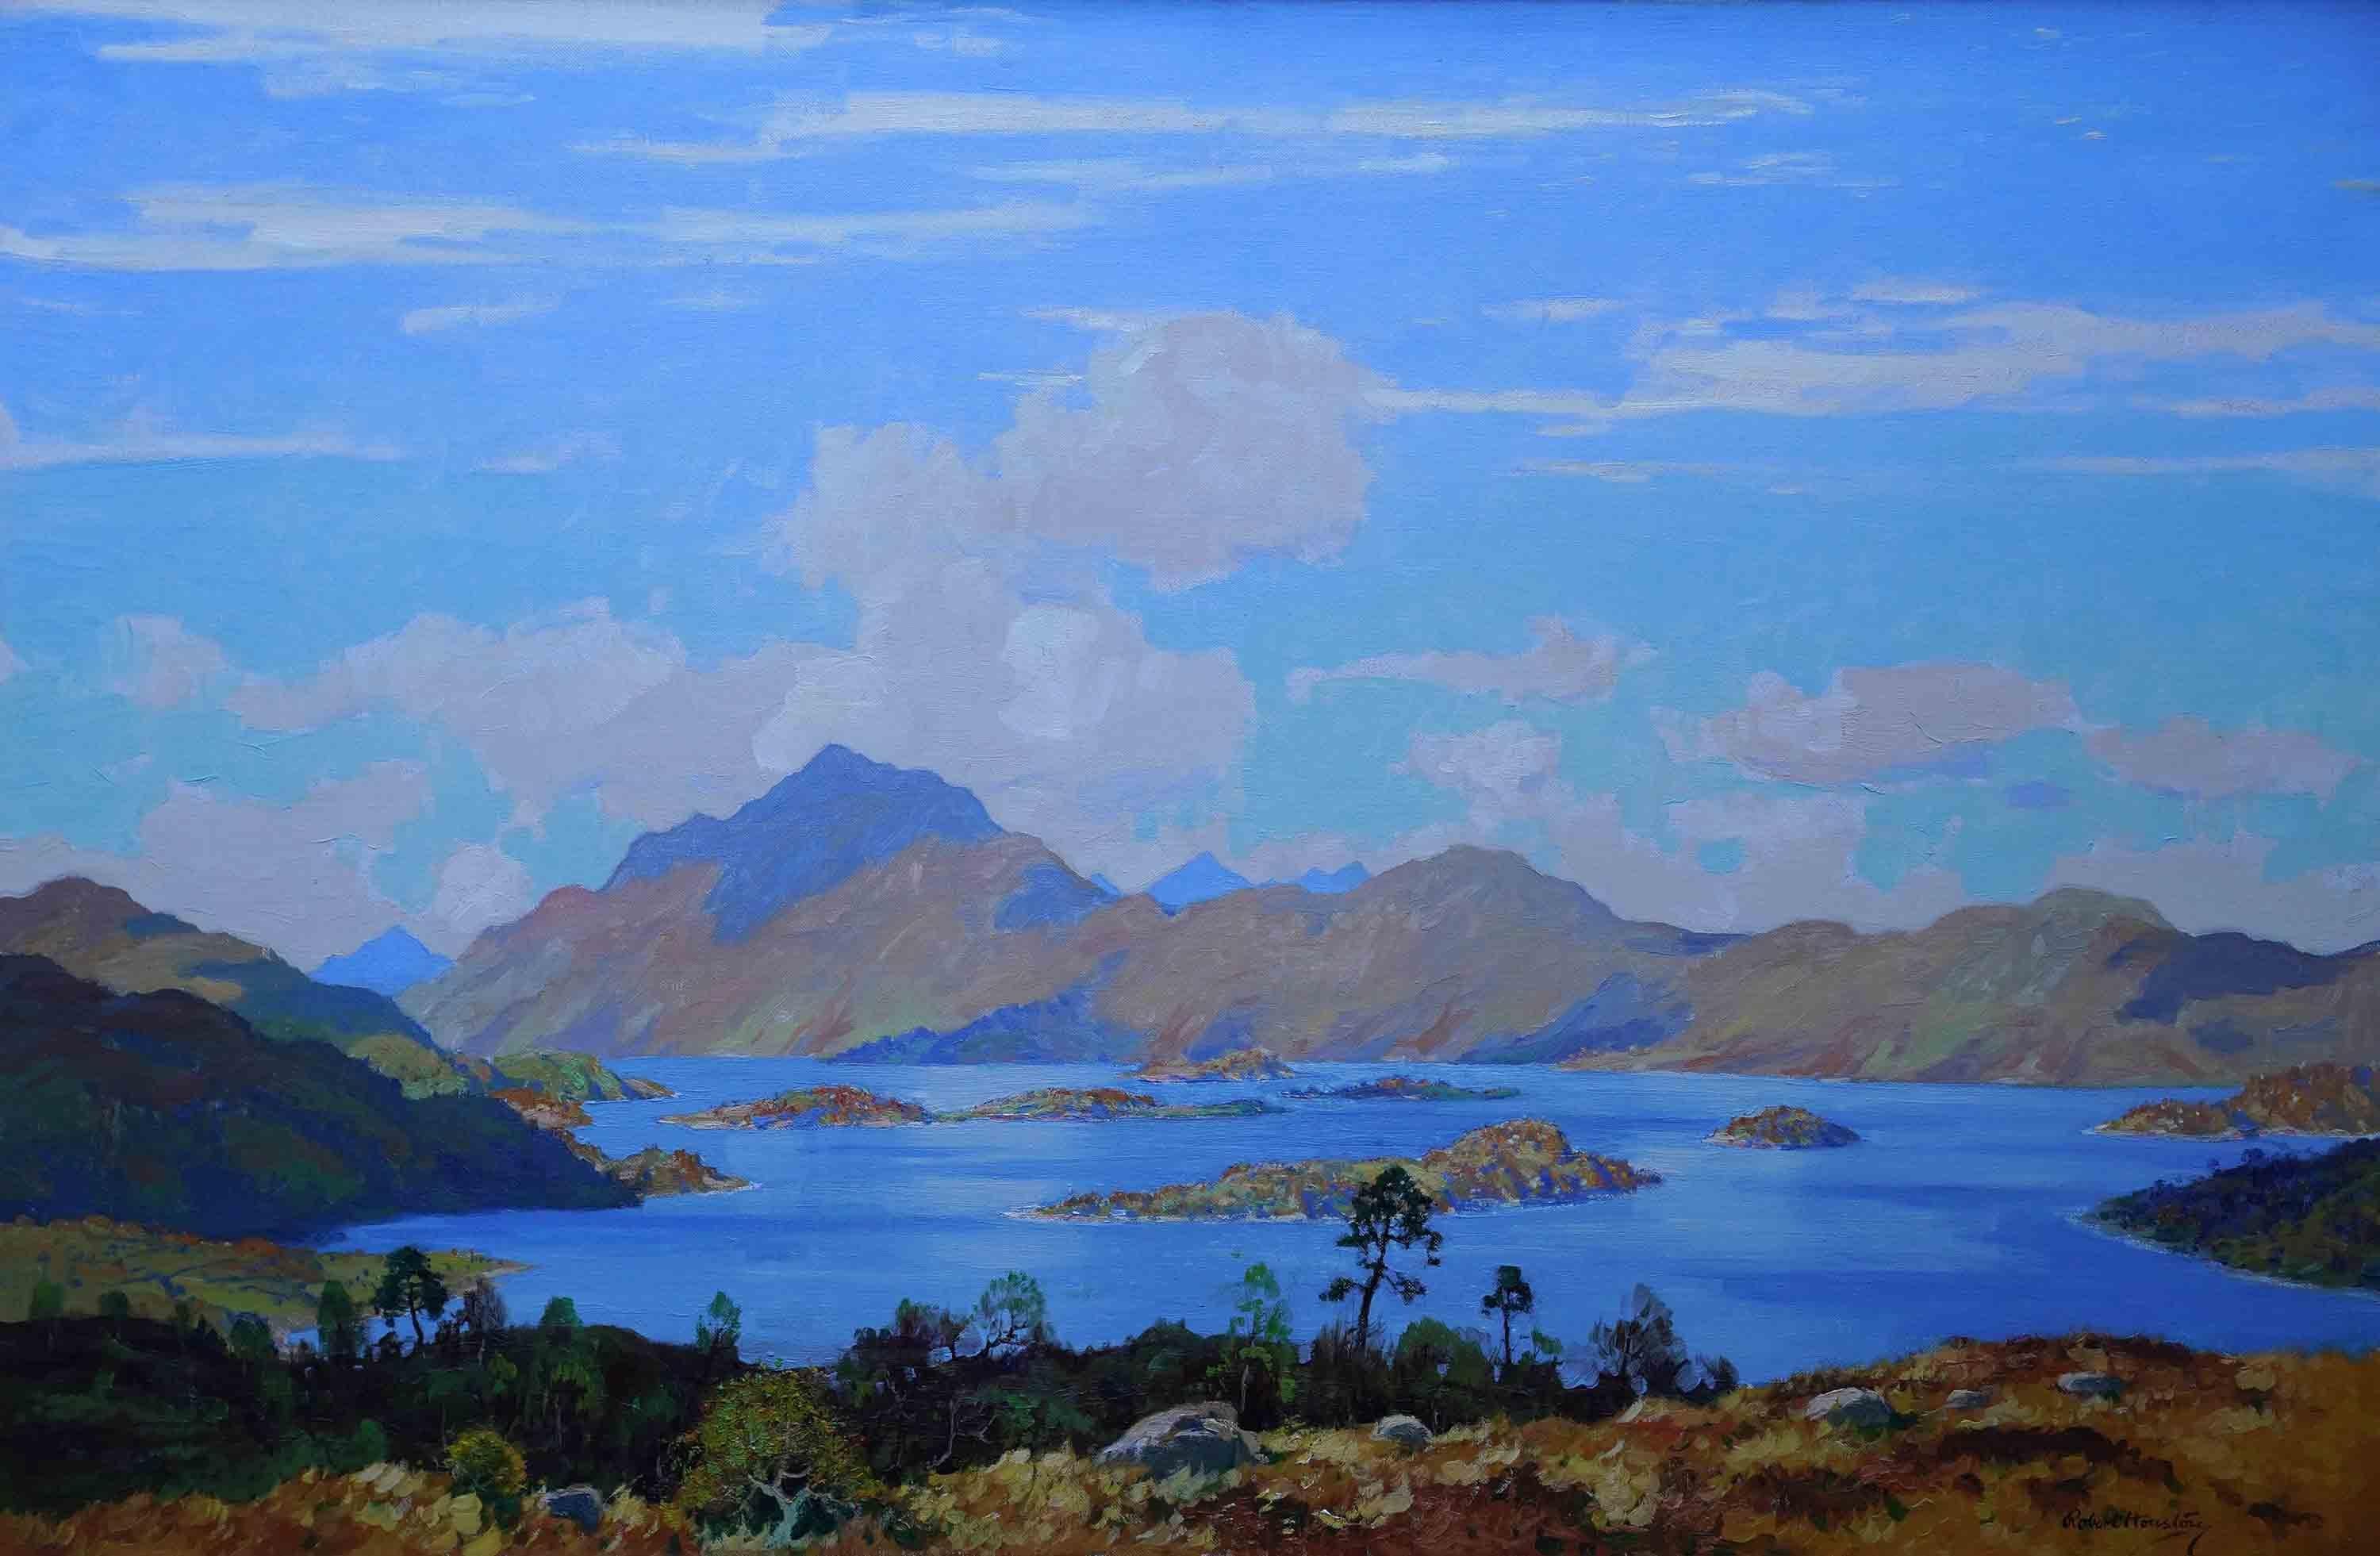 Loch Lomond Scotland - Scottish exhibited art landscape oil painting - Painting by Robert Houston